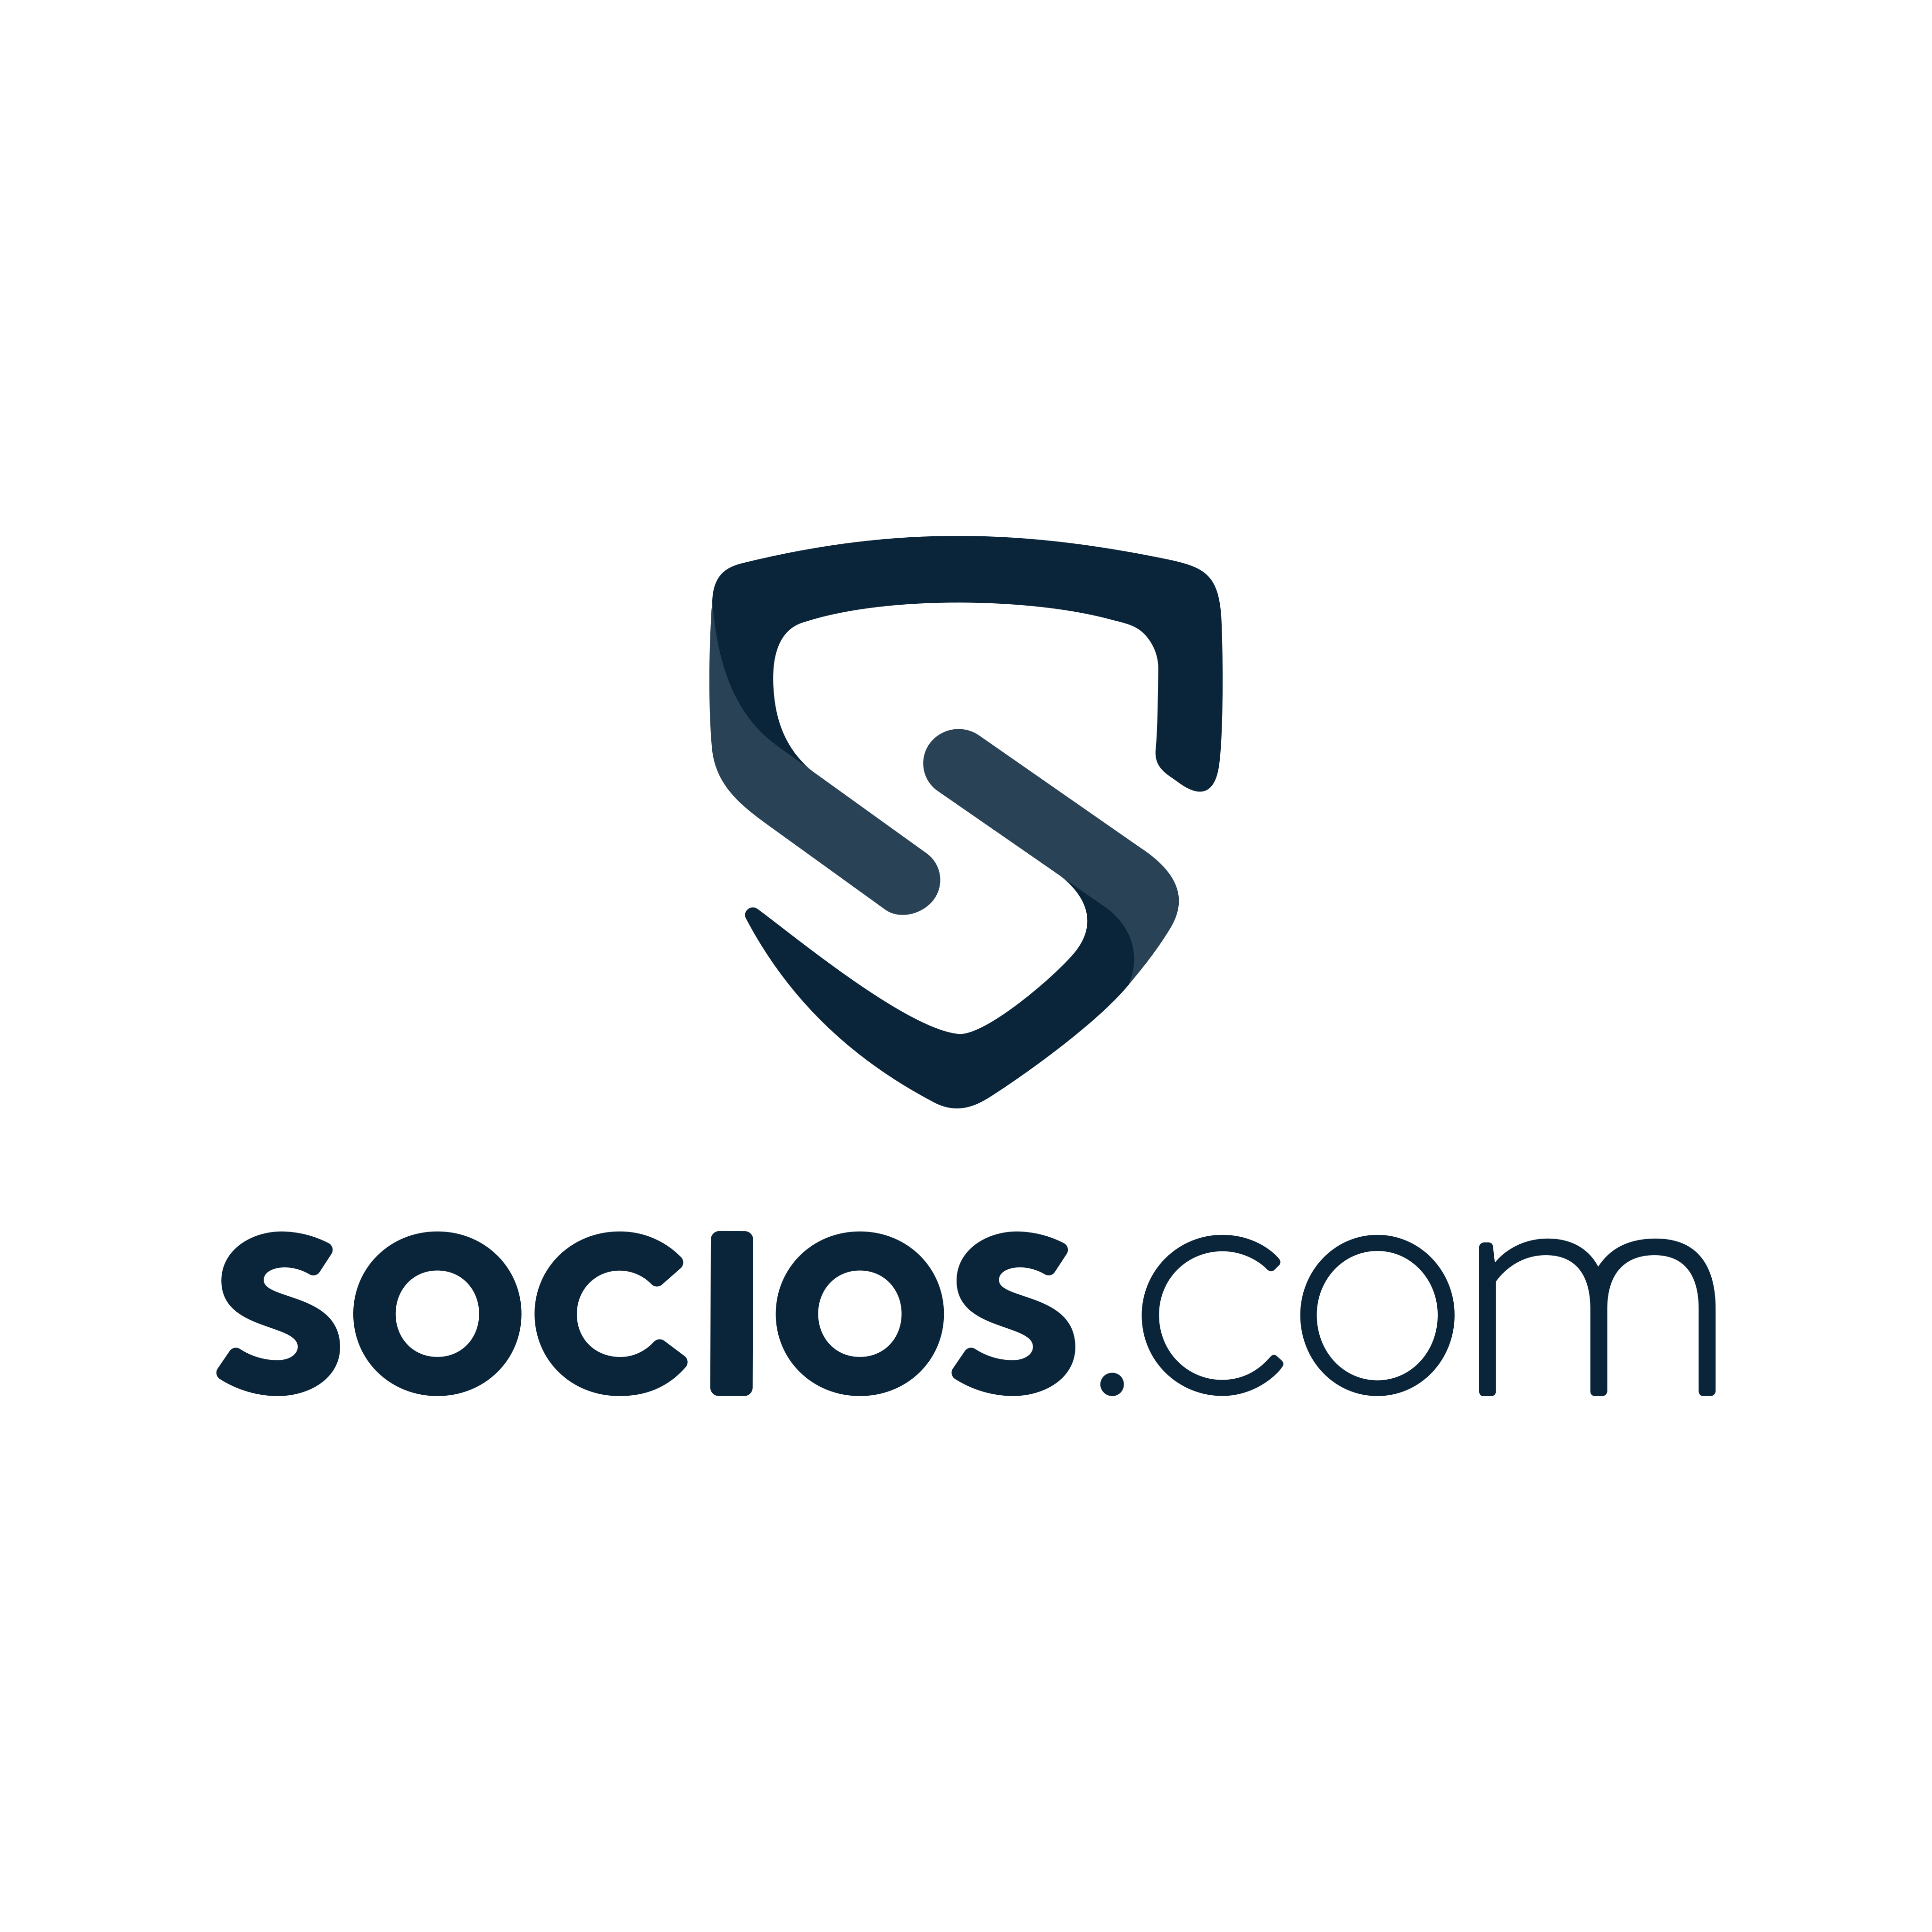 Socios.com Logo PNG.